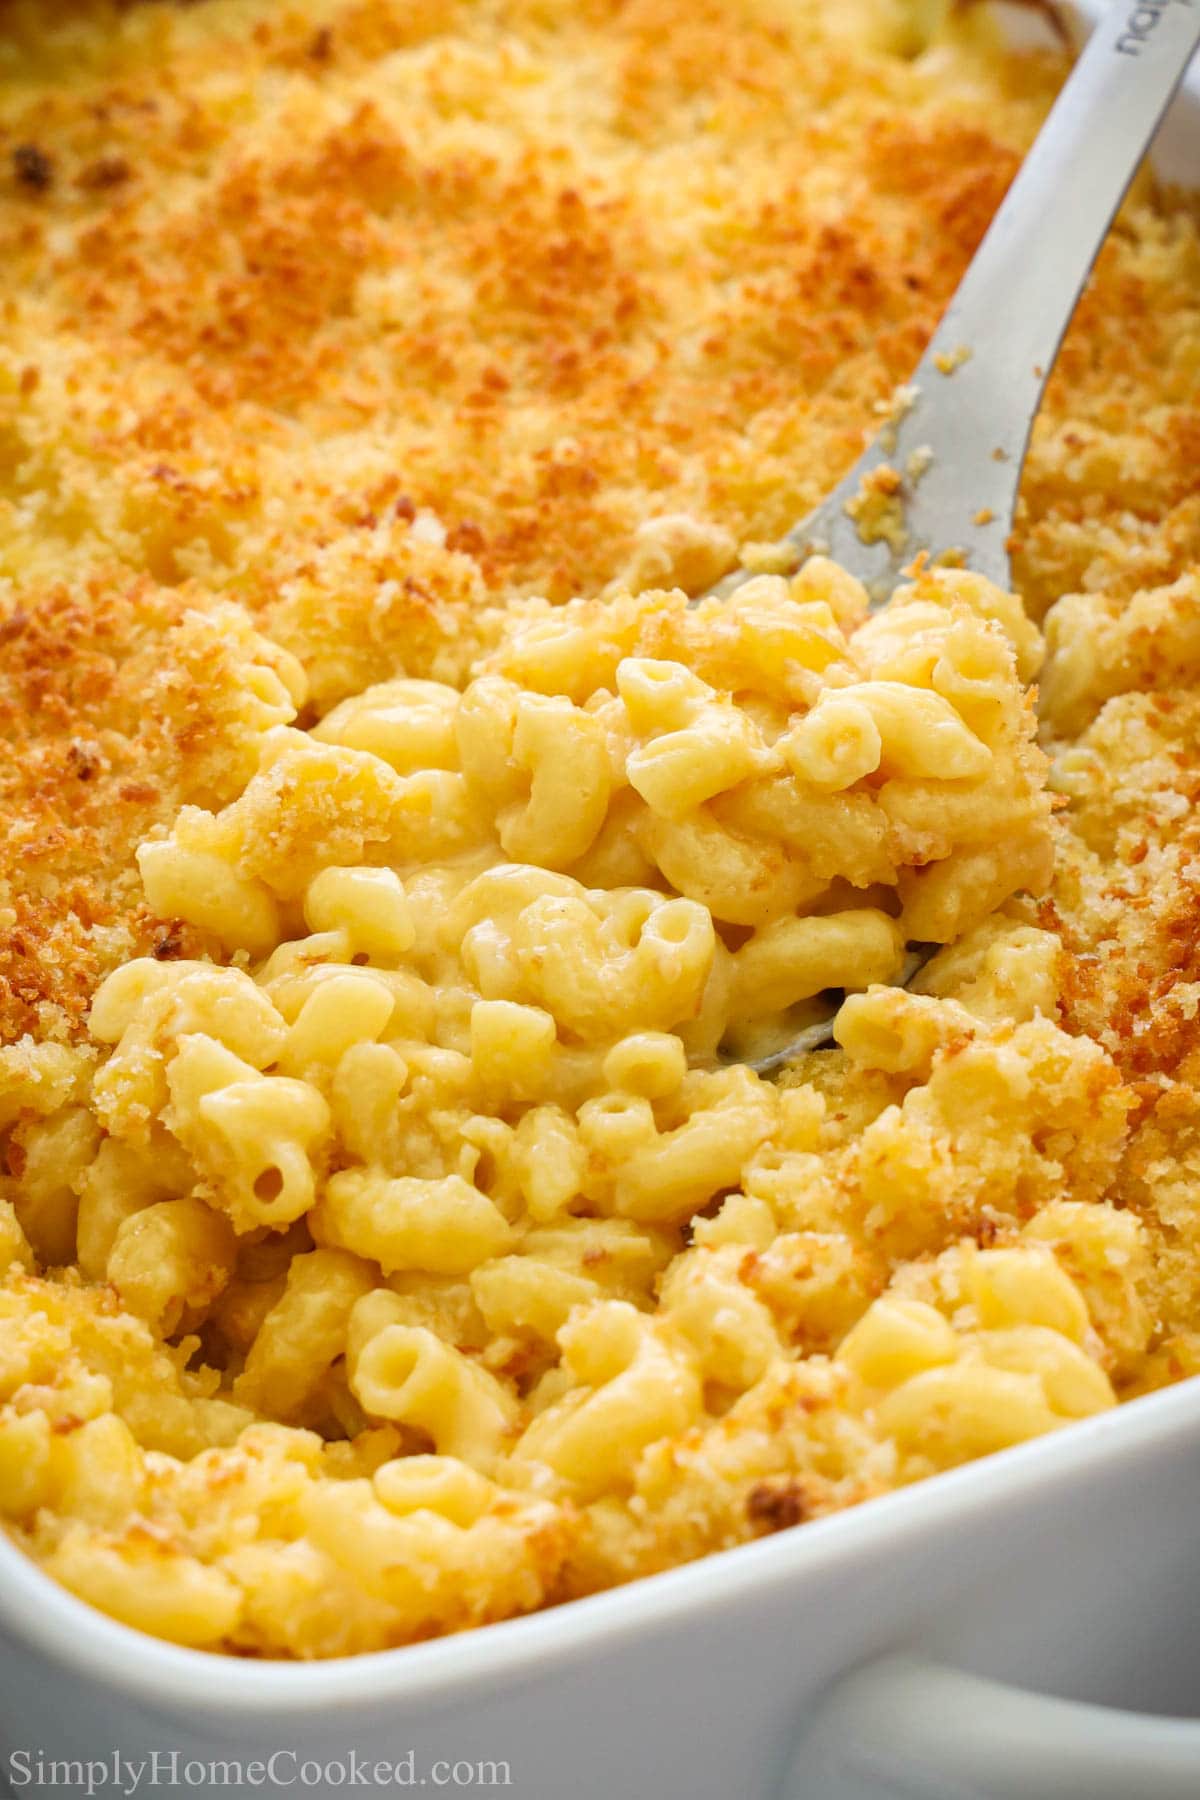 Best Macaroni and Cheese Recipe - How to Make Homemade Mac and Cheese